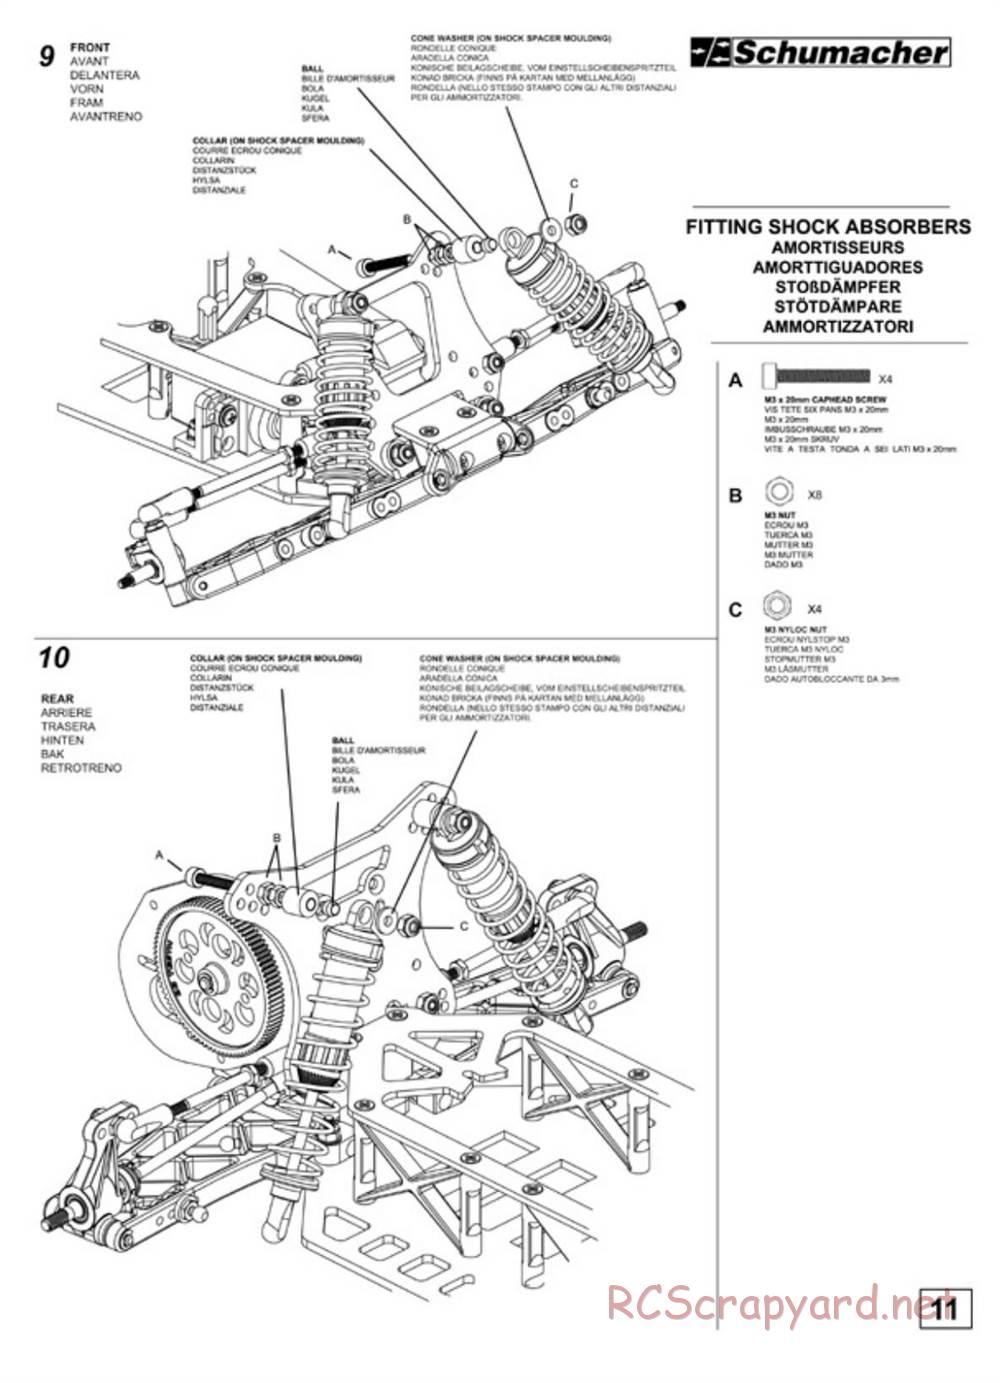 Schumacher - Fireblade Evo - Manual - Page 13